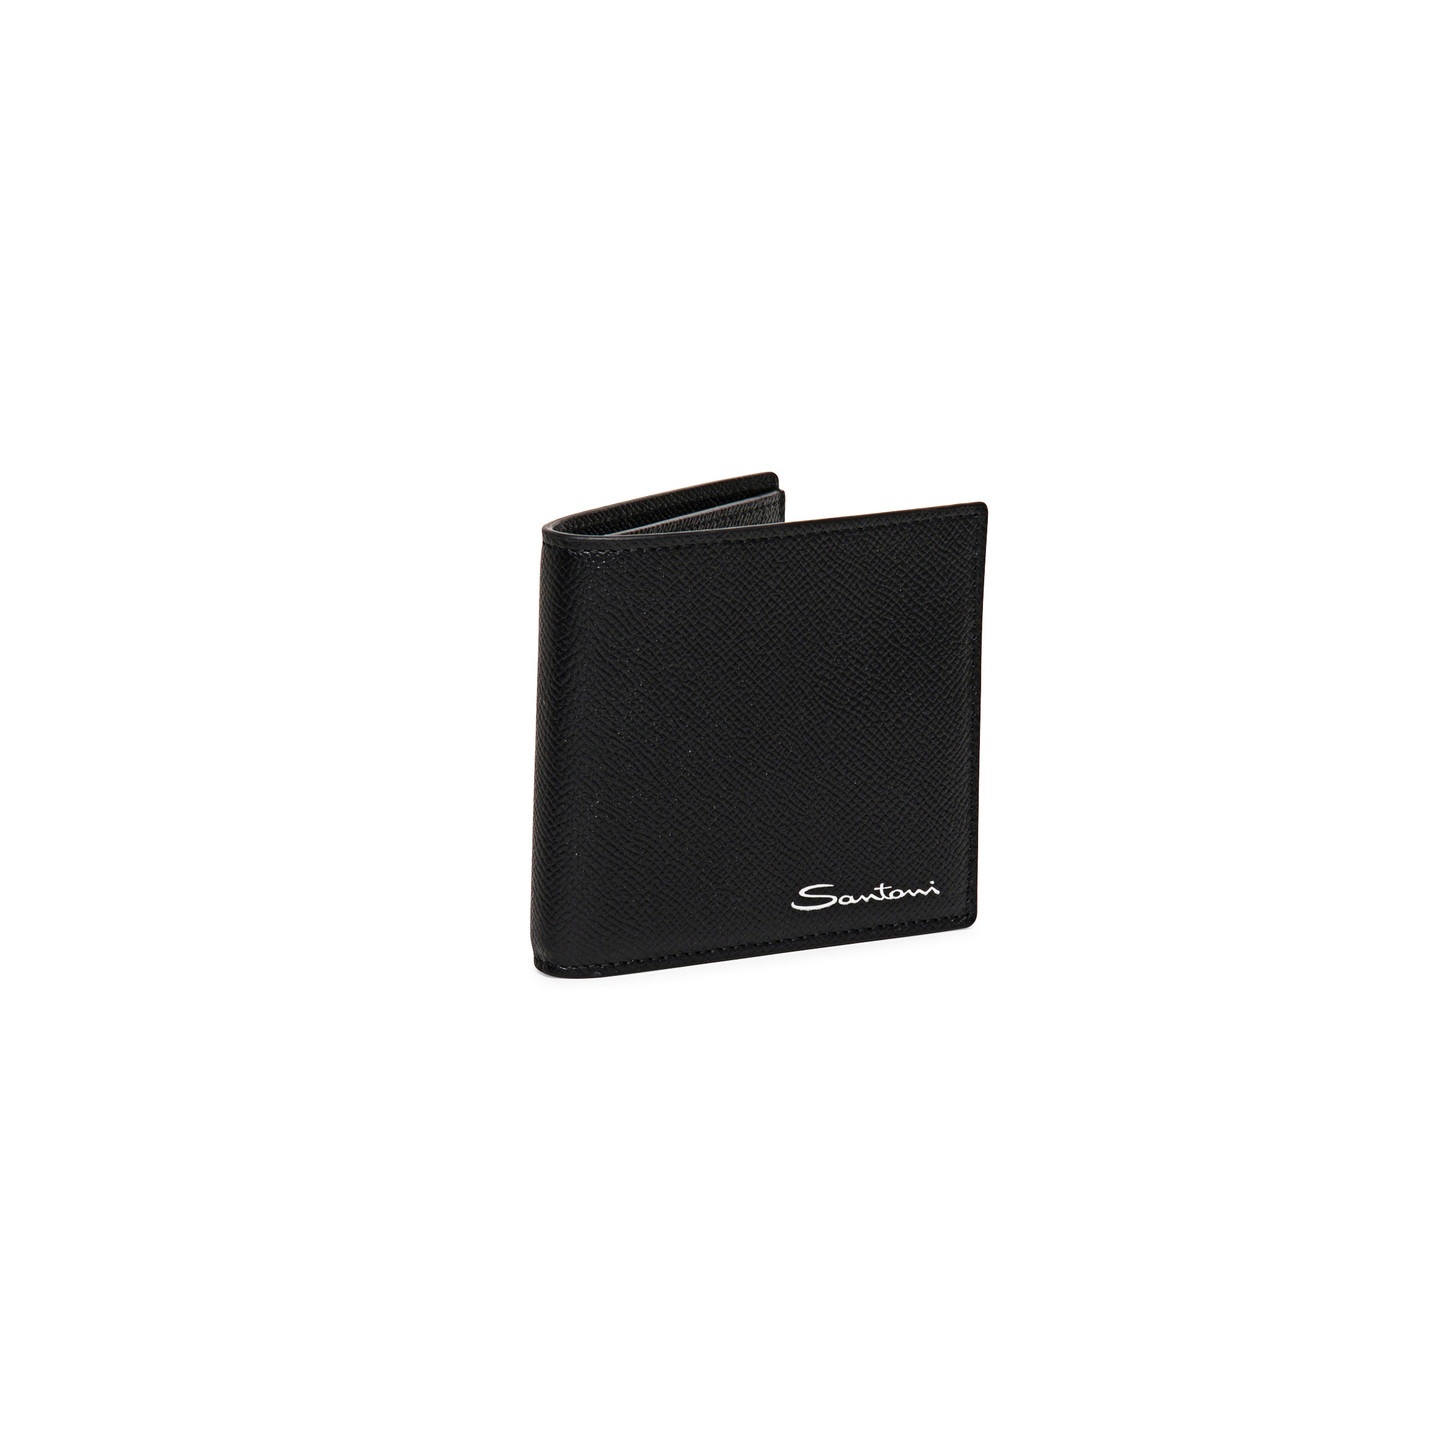 Black saffiano leather wallet - 4